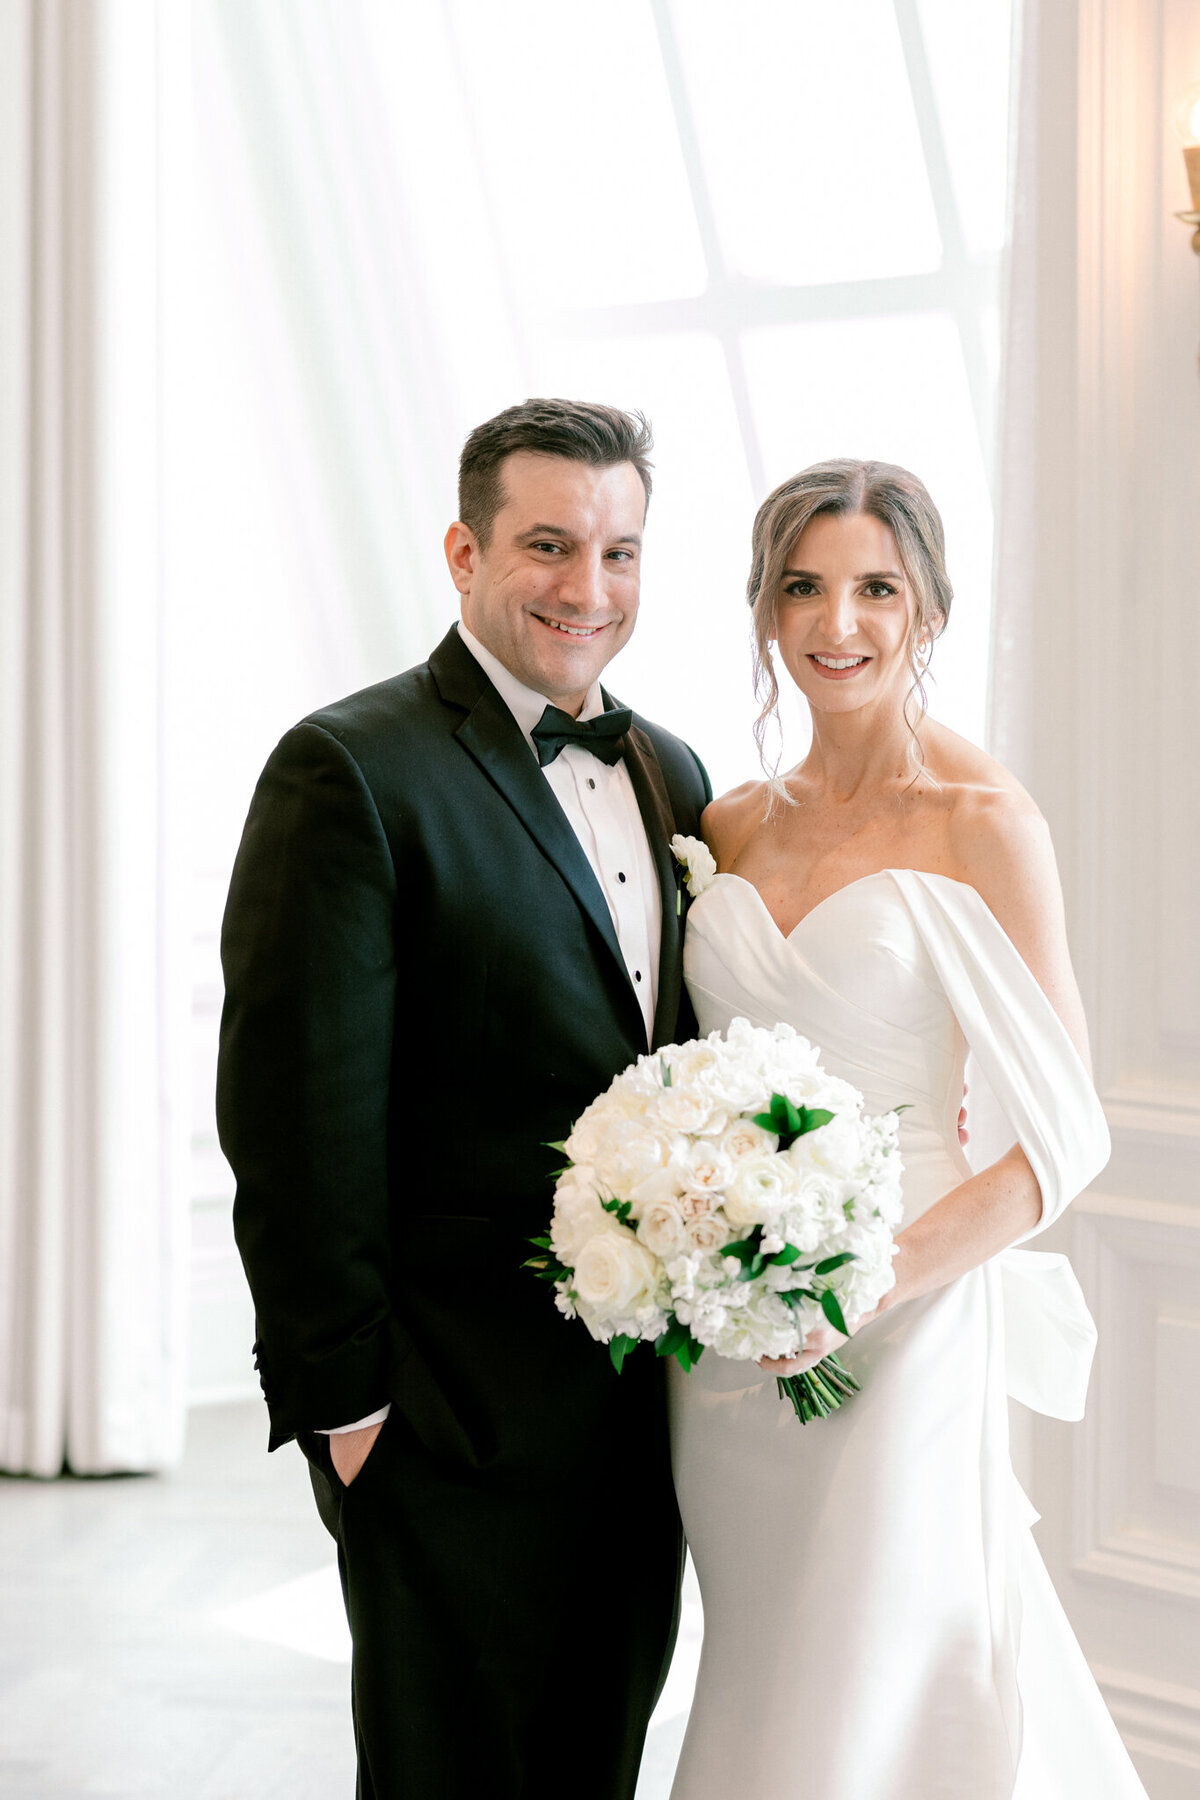 Virginia & Michael's Wedding at the Adolphus Hotel | Dallas Wedding Photographer | Sami Kathryn Photography-58